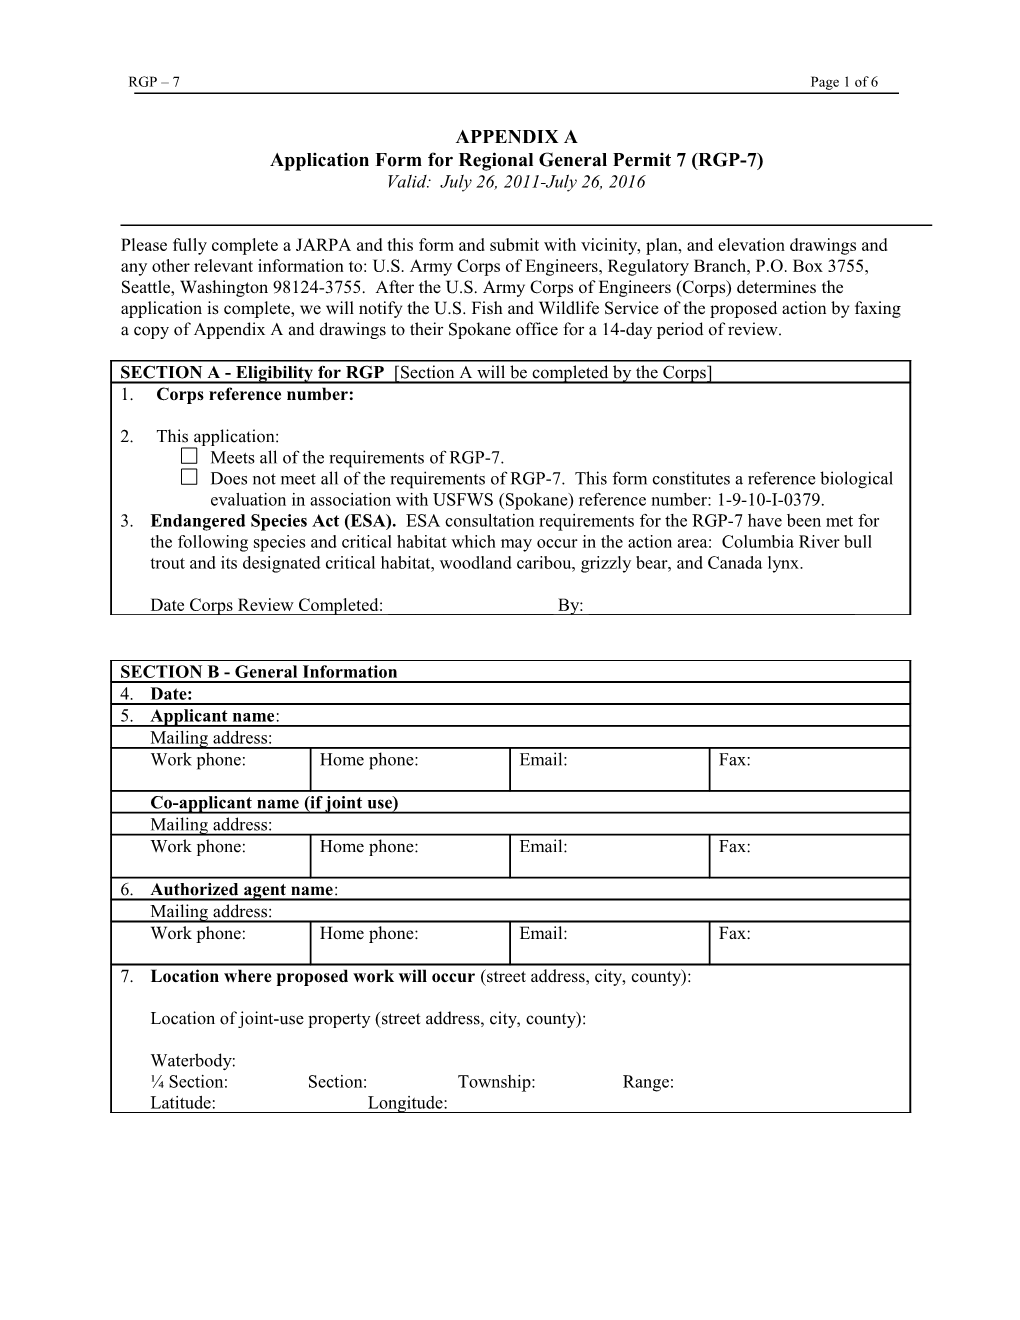 Application Form for Regional General Permit 7 (RGP-7)